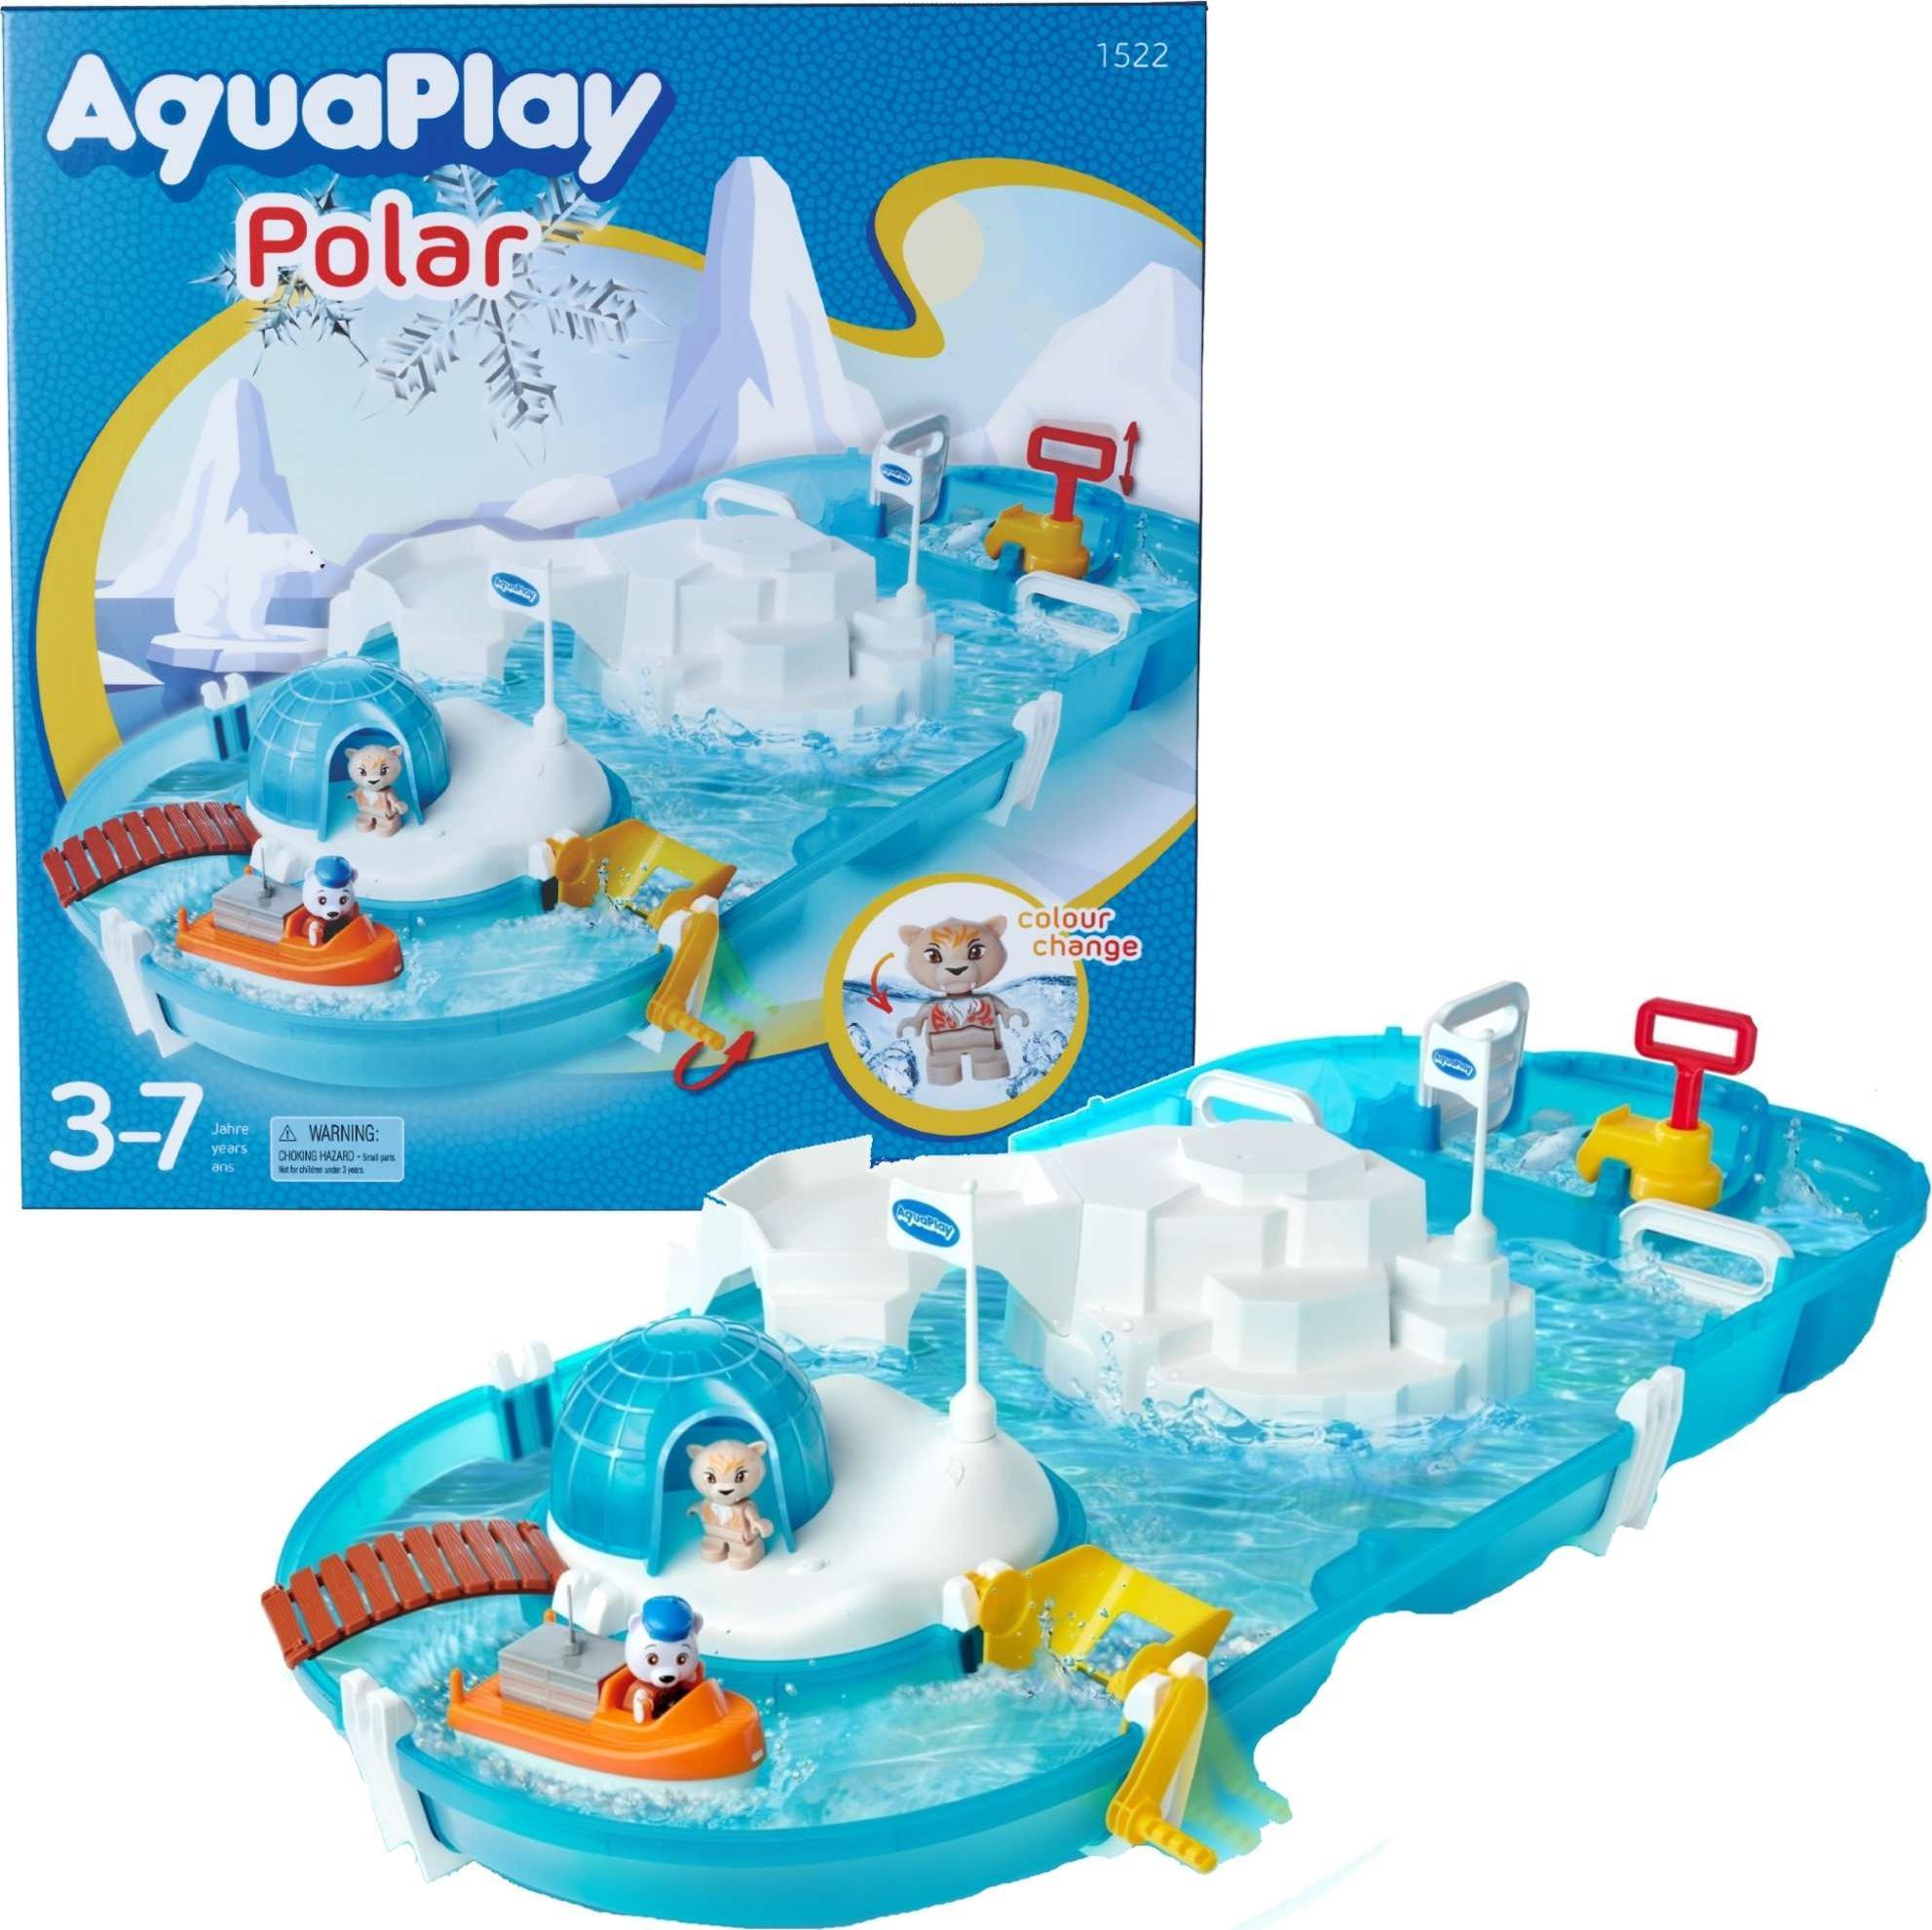 Big Aquaplay set Polar fairway + figurine